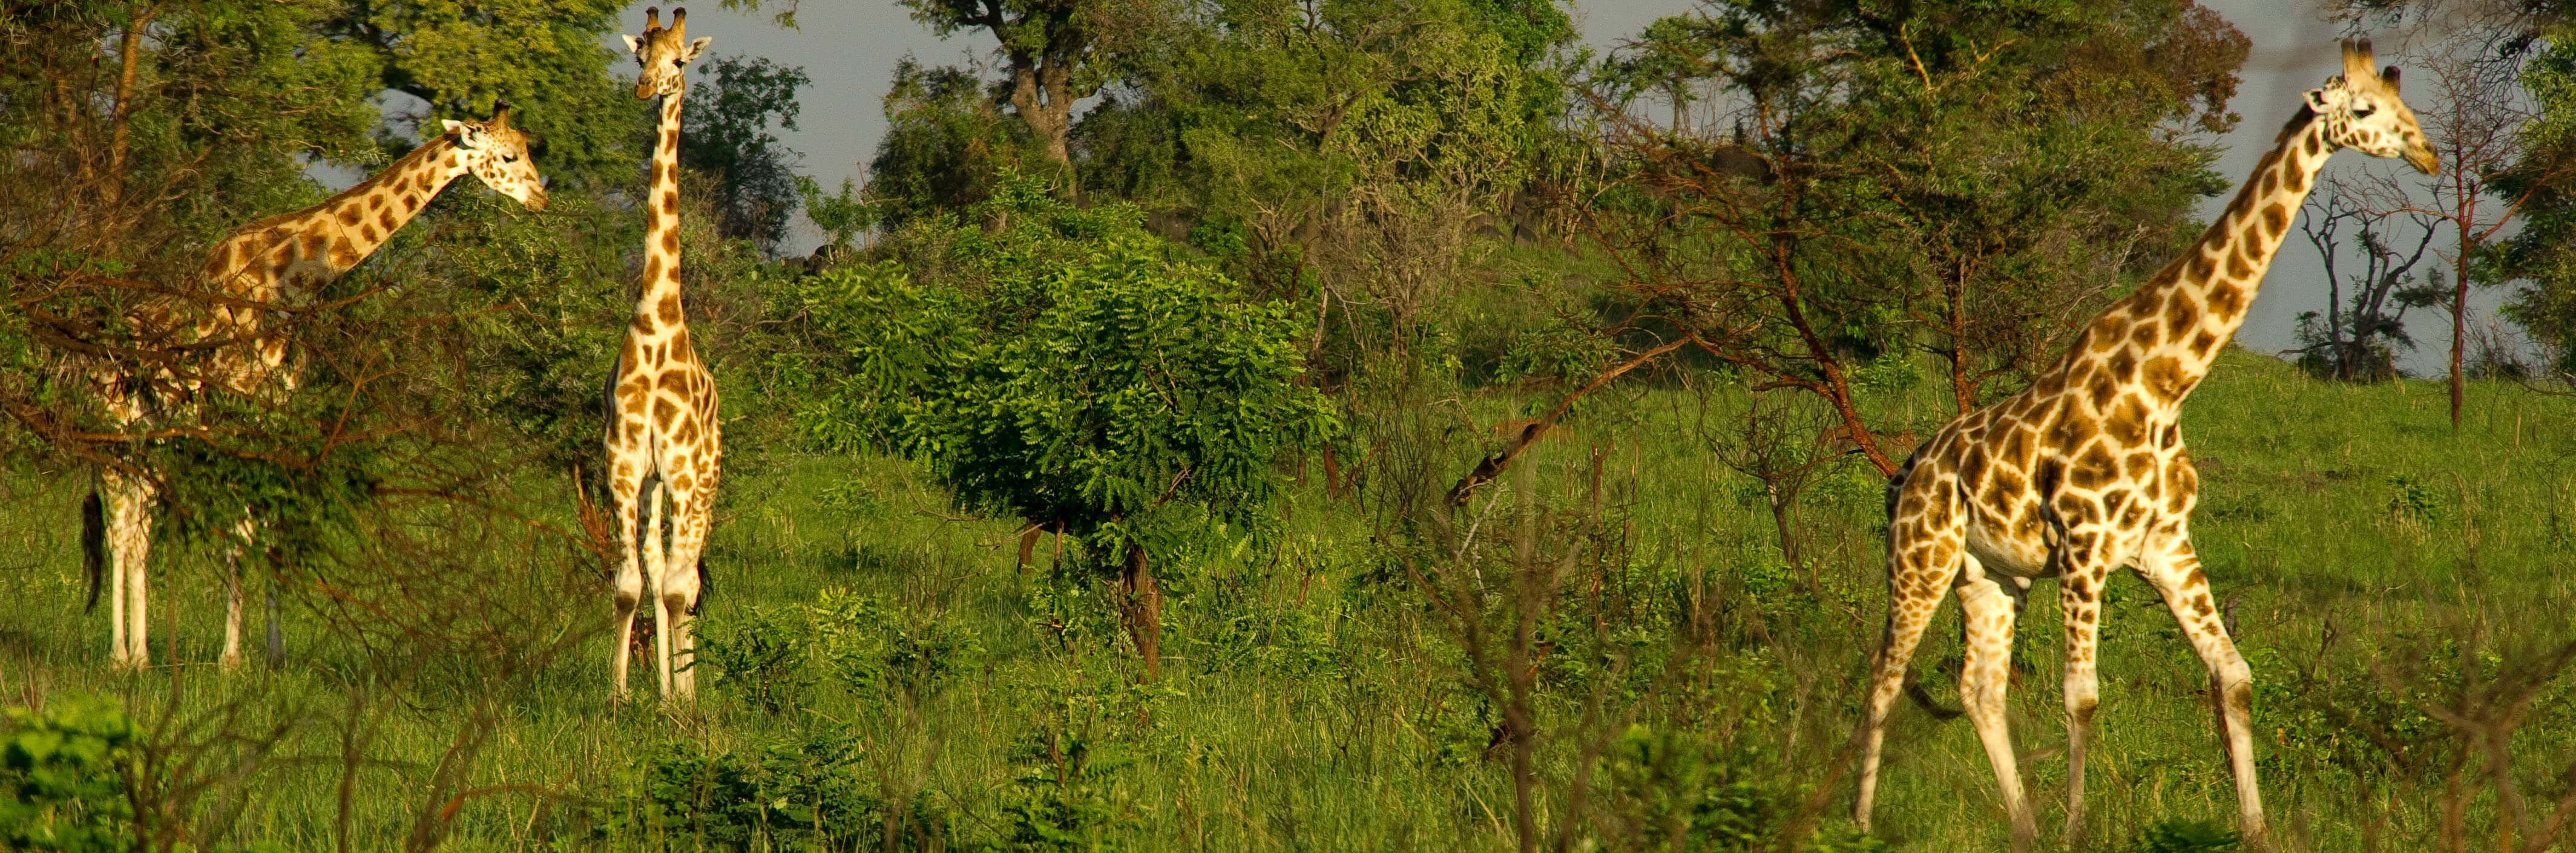 Thornycroft's giraffes | South Luangwa, Zambia